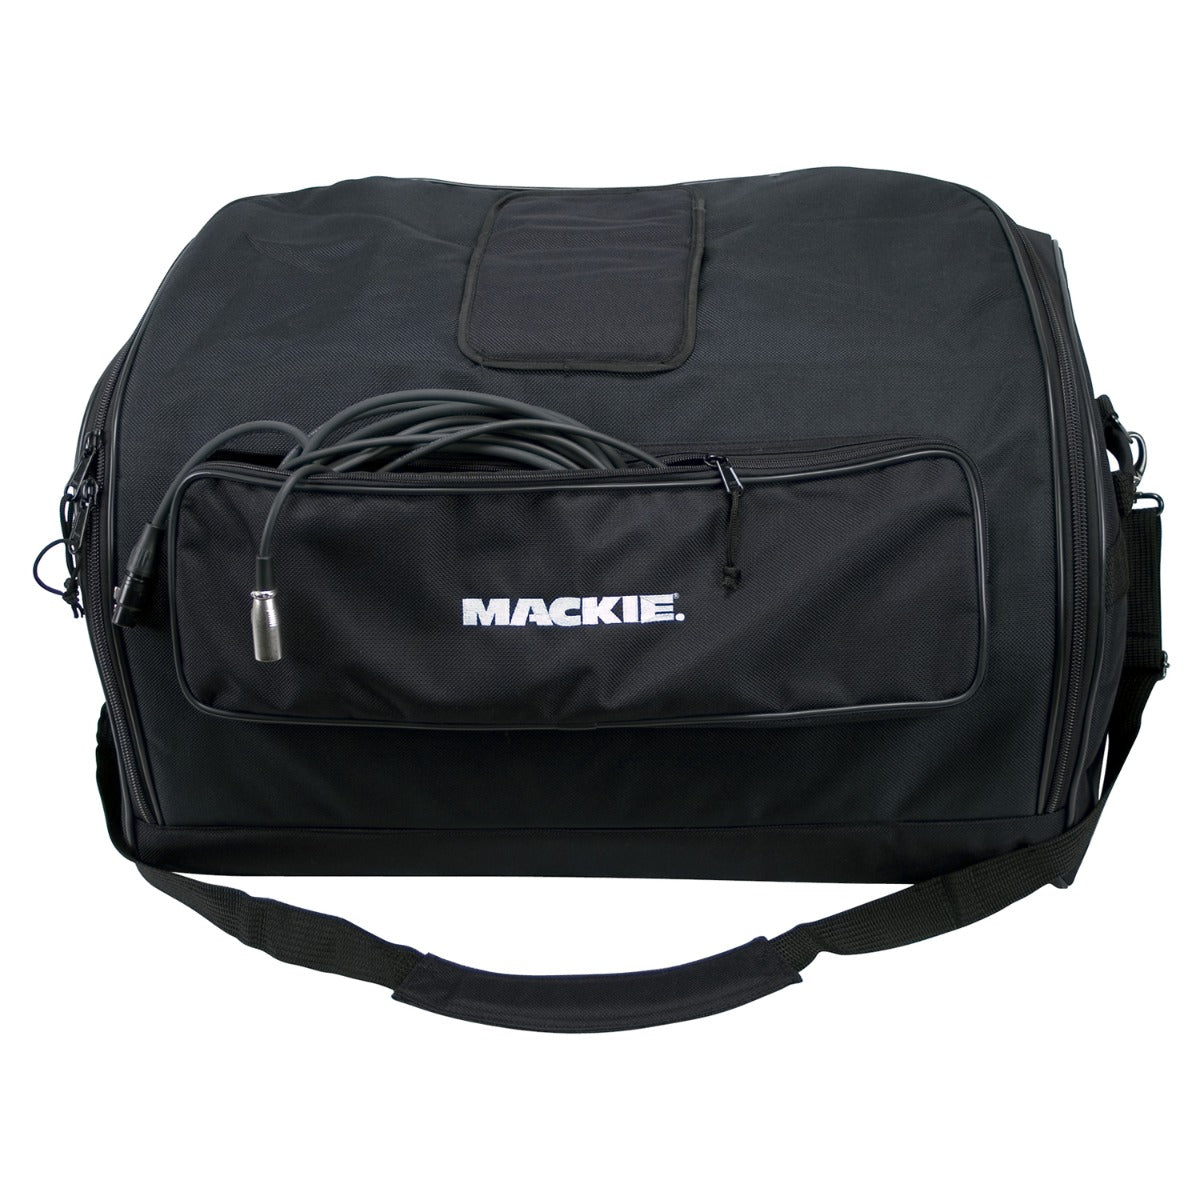 View of Mackie SRM450 / C300z Speaker Bag showing accessory pocket